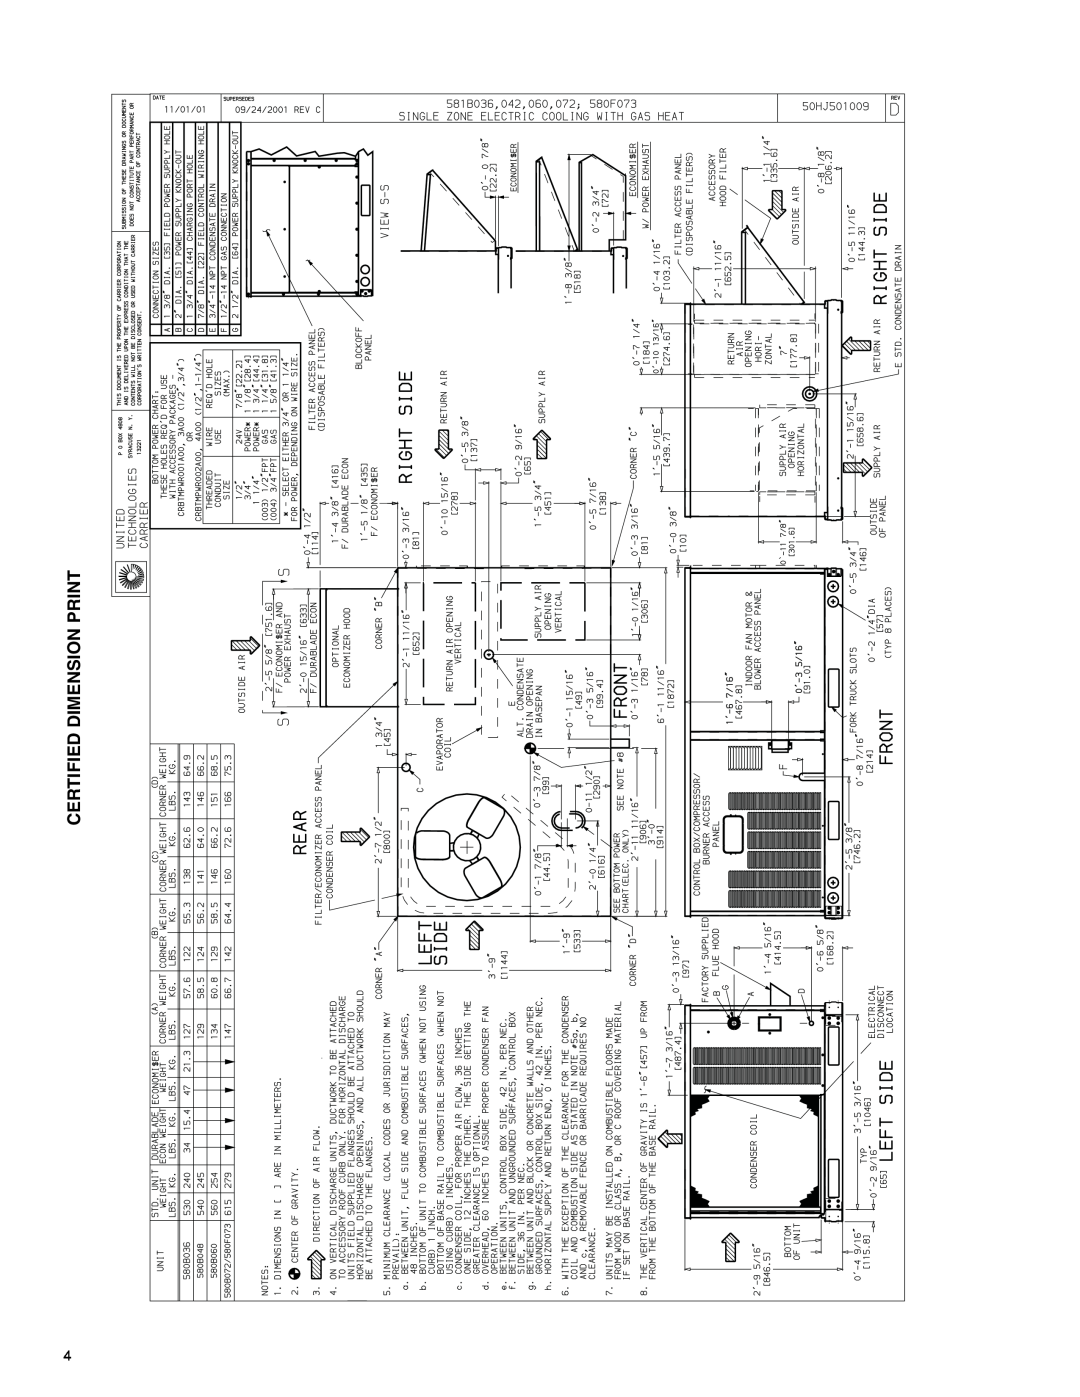 Bryant 580F036-150 warranty Certified Dimension Print 